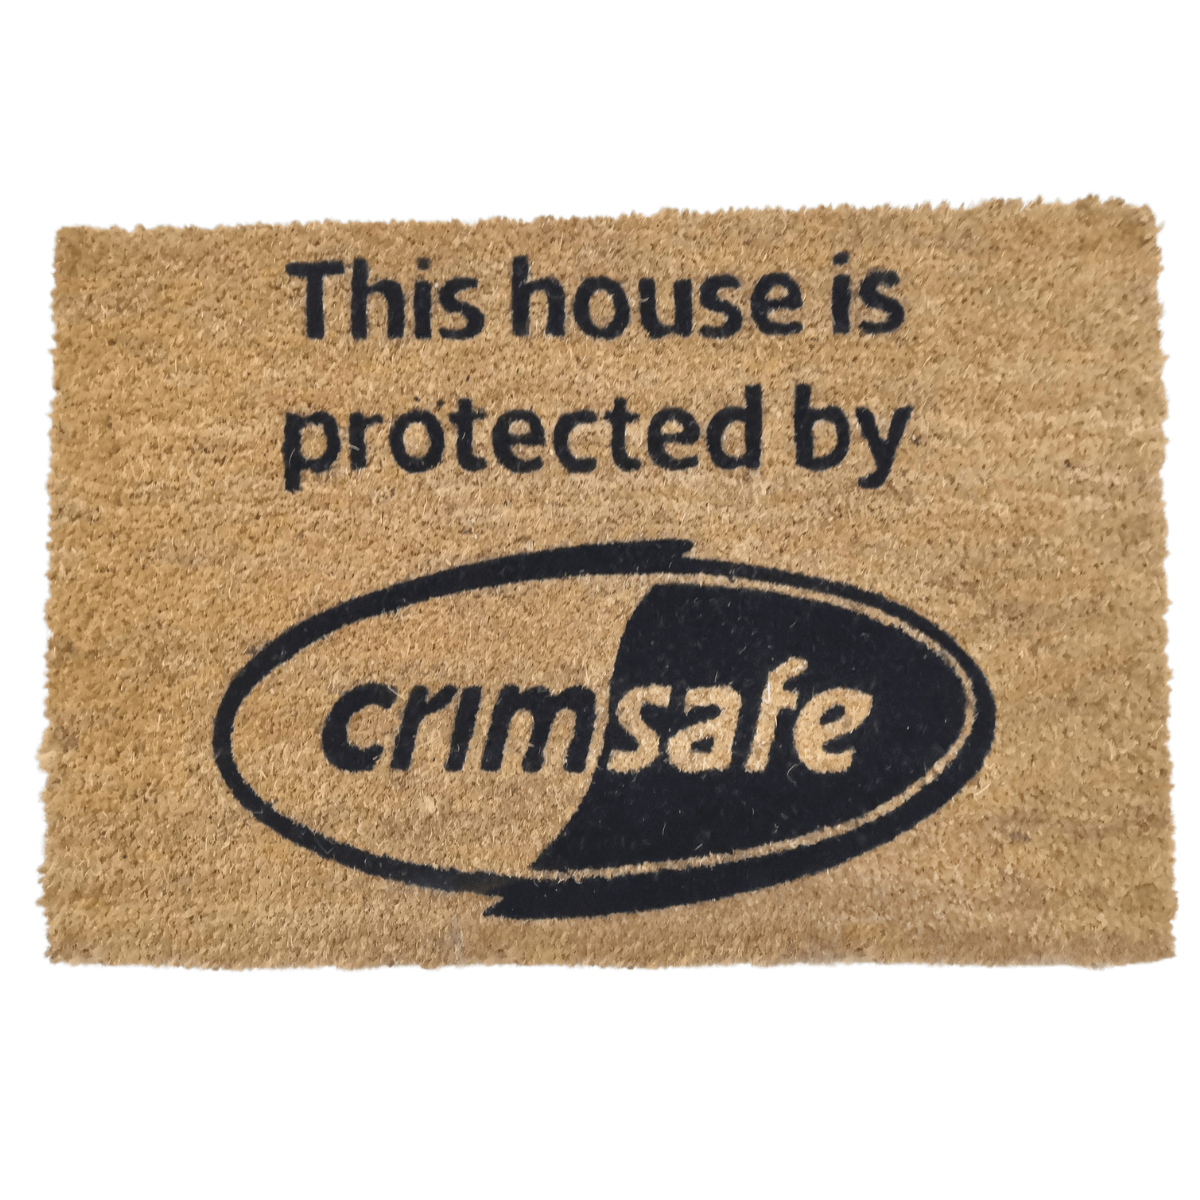 Crimsafe doormat - This house is protected by Crimsafe